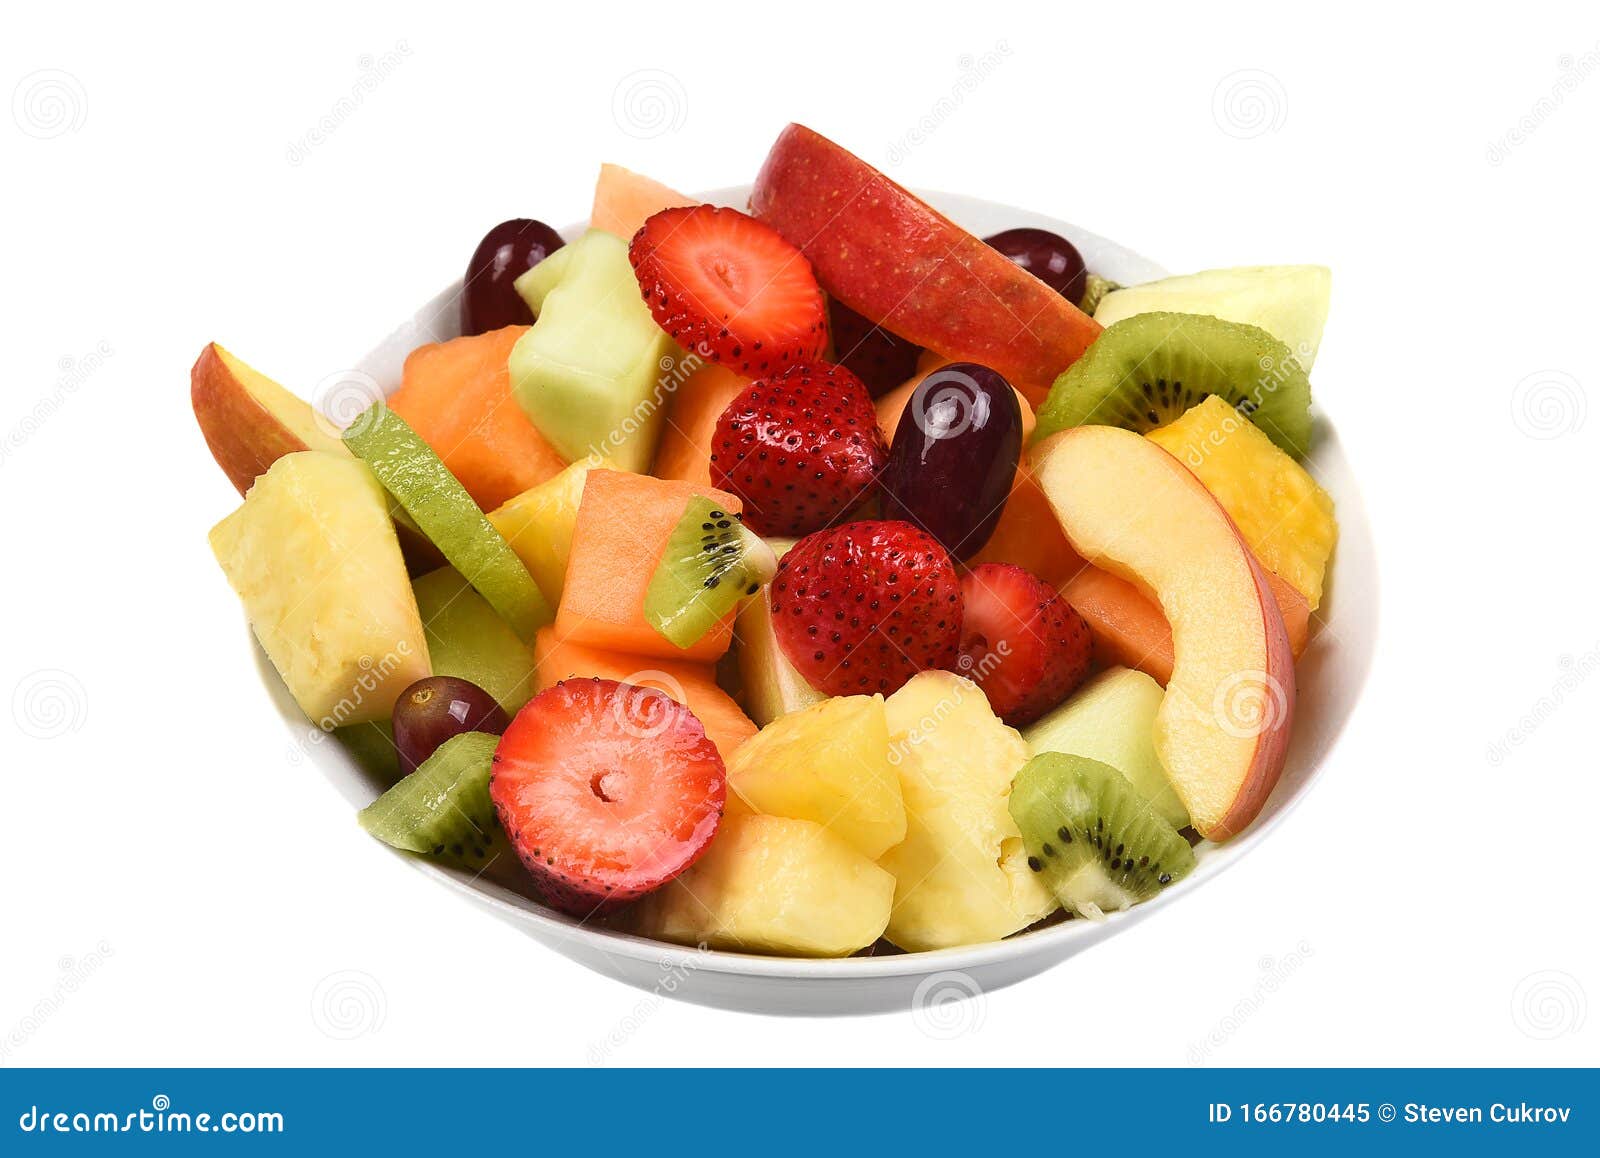 https://thumbs.dreamstime.com/z/un-bol-de-fruta-fresca-cortada-aislados-las-frutas-blancas-incluyen-fresa-pi%C3%B1a-manzana-cantaloupe-honeydew-melon-kiwi-y-gr-uvas-166780445.jpg